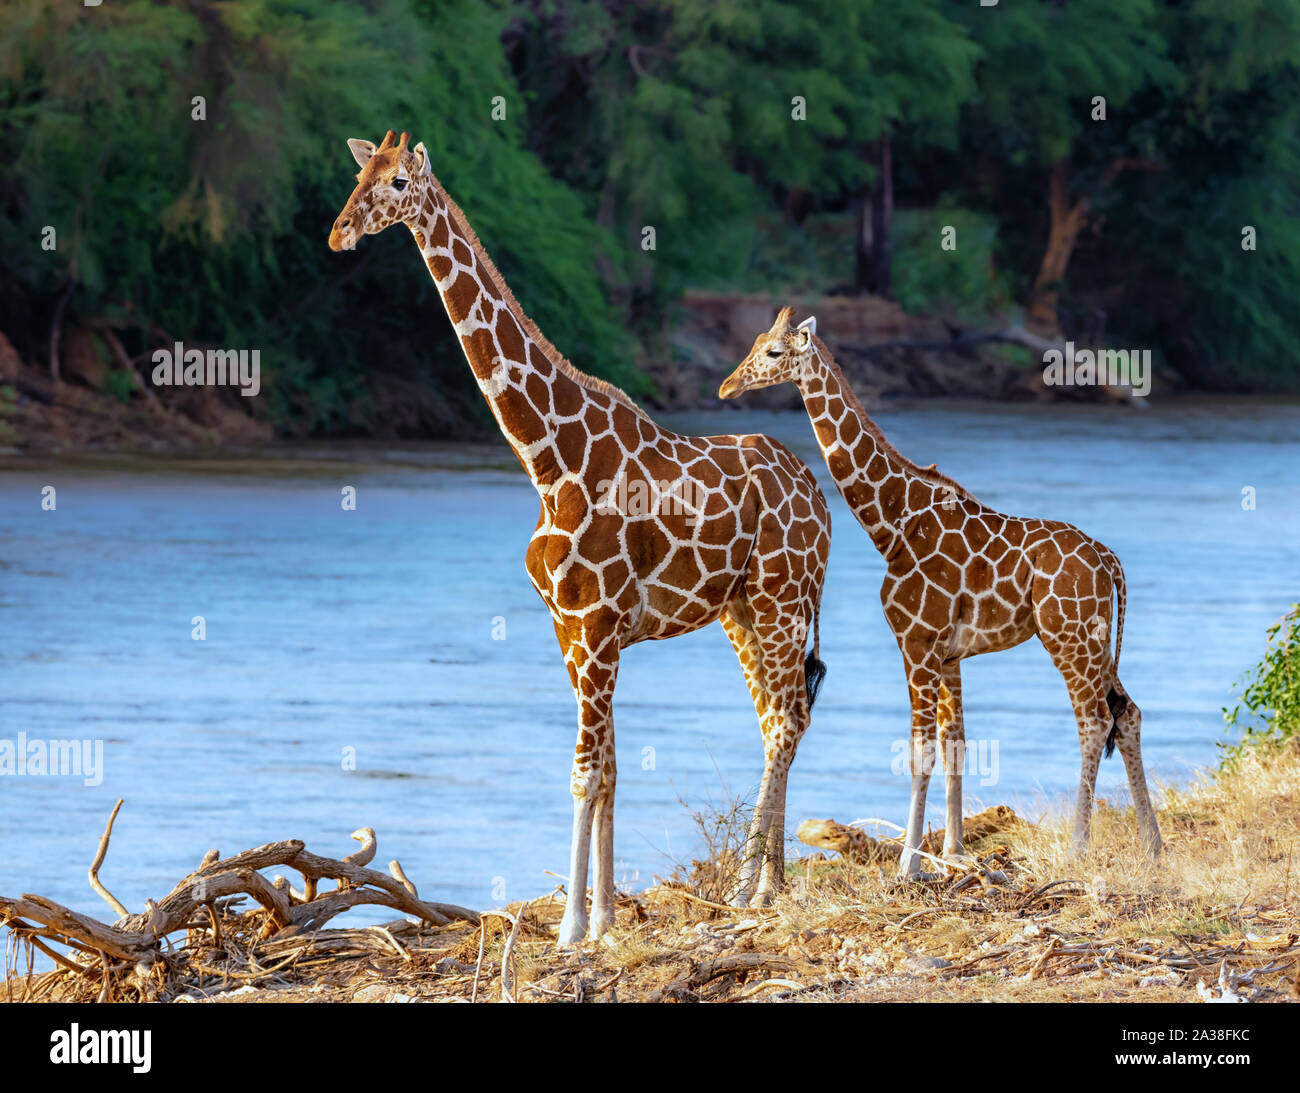 Adult and young Reticulated giraffes, Samburu national reserve, Kenya Stock Photo